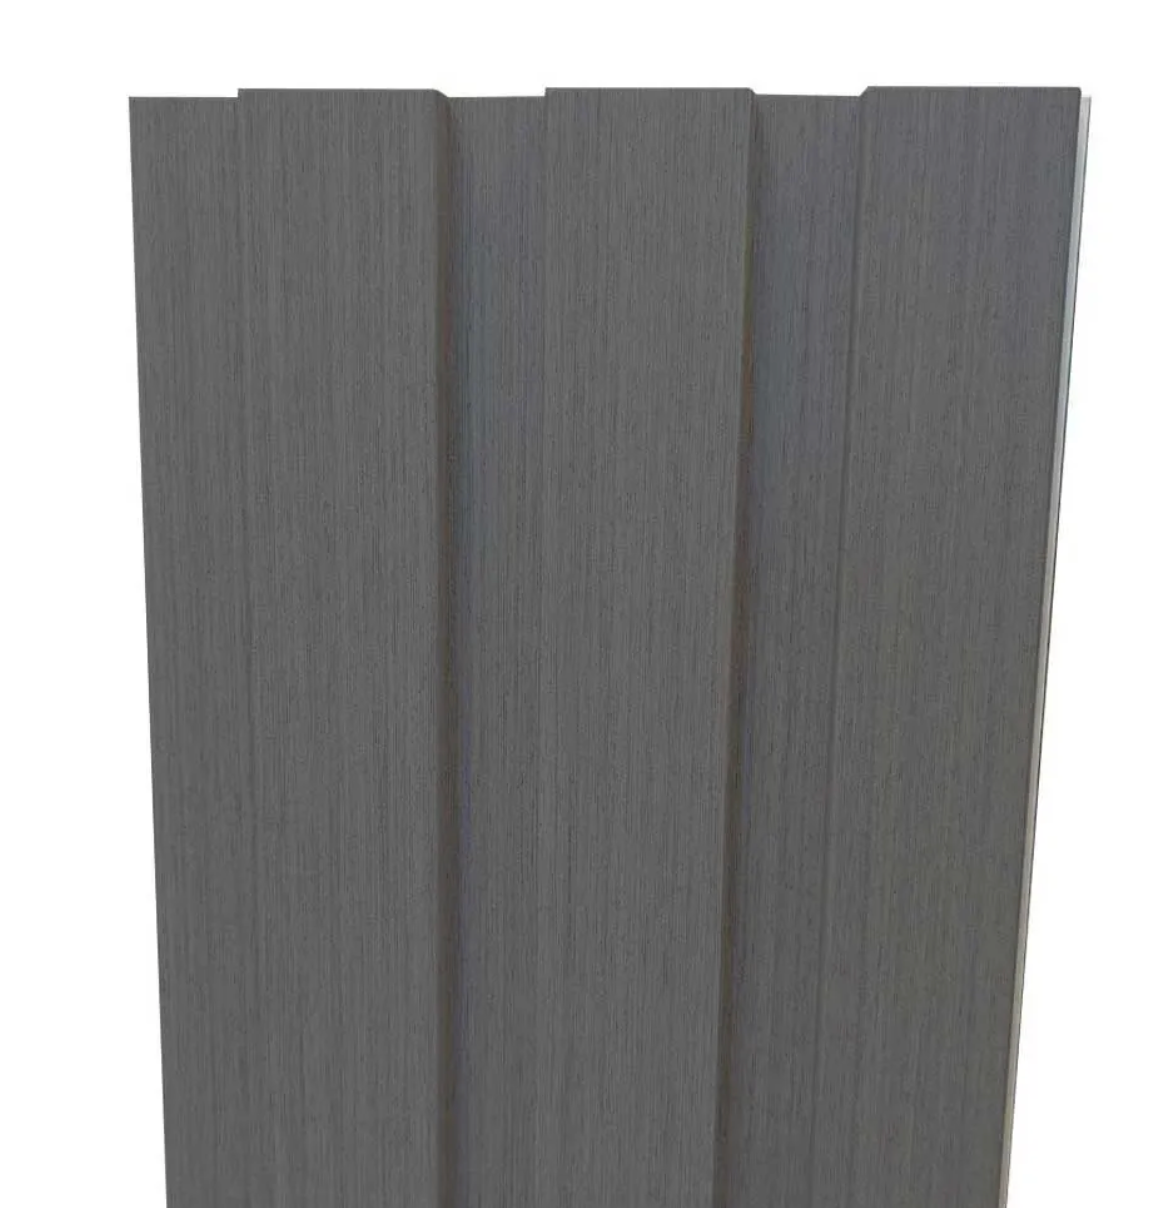 PVC Thermo-Slat Wall Panel - Charcoal Grey